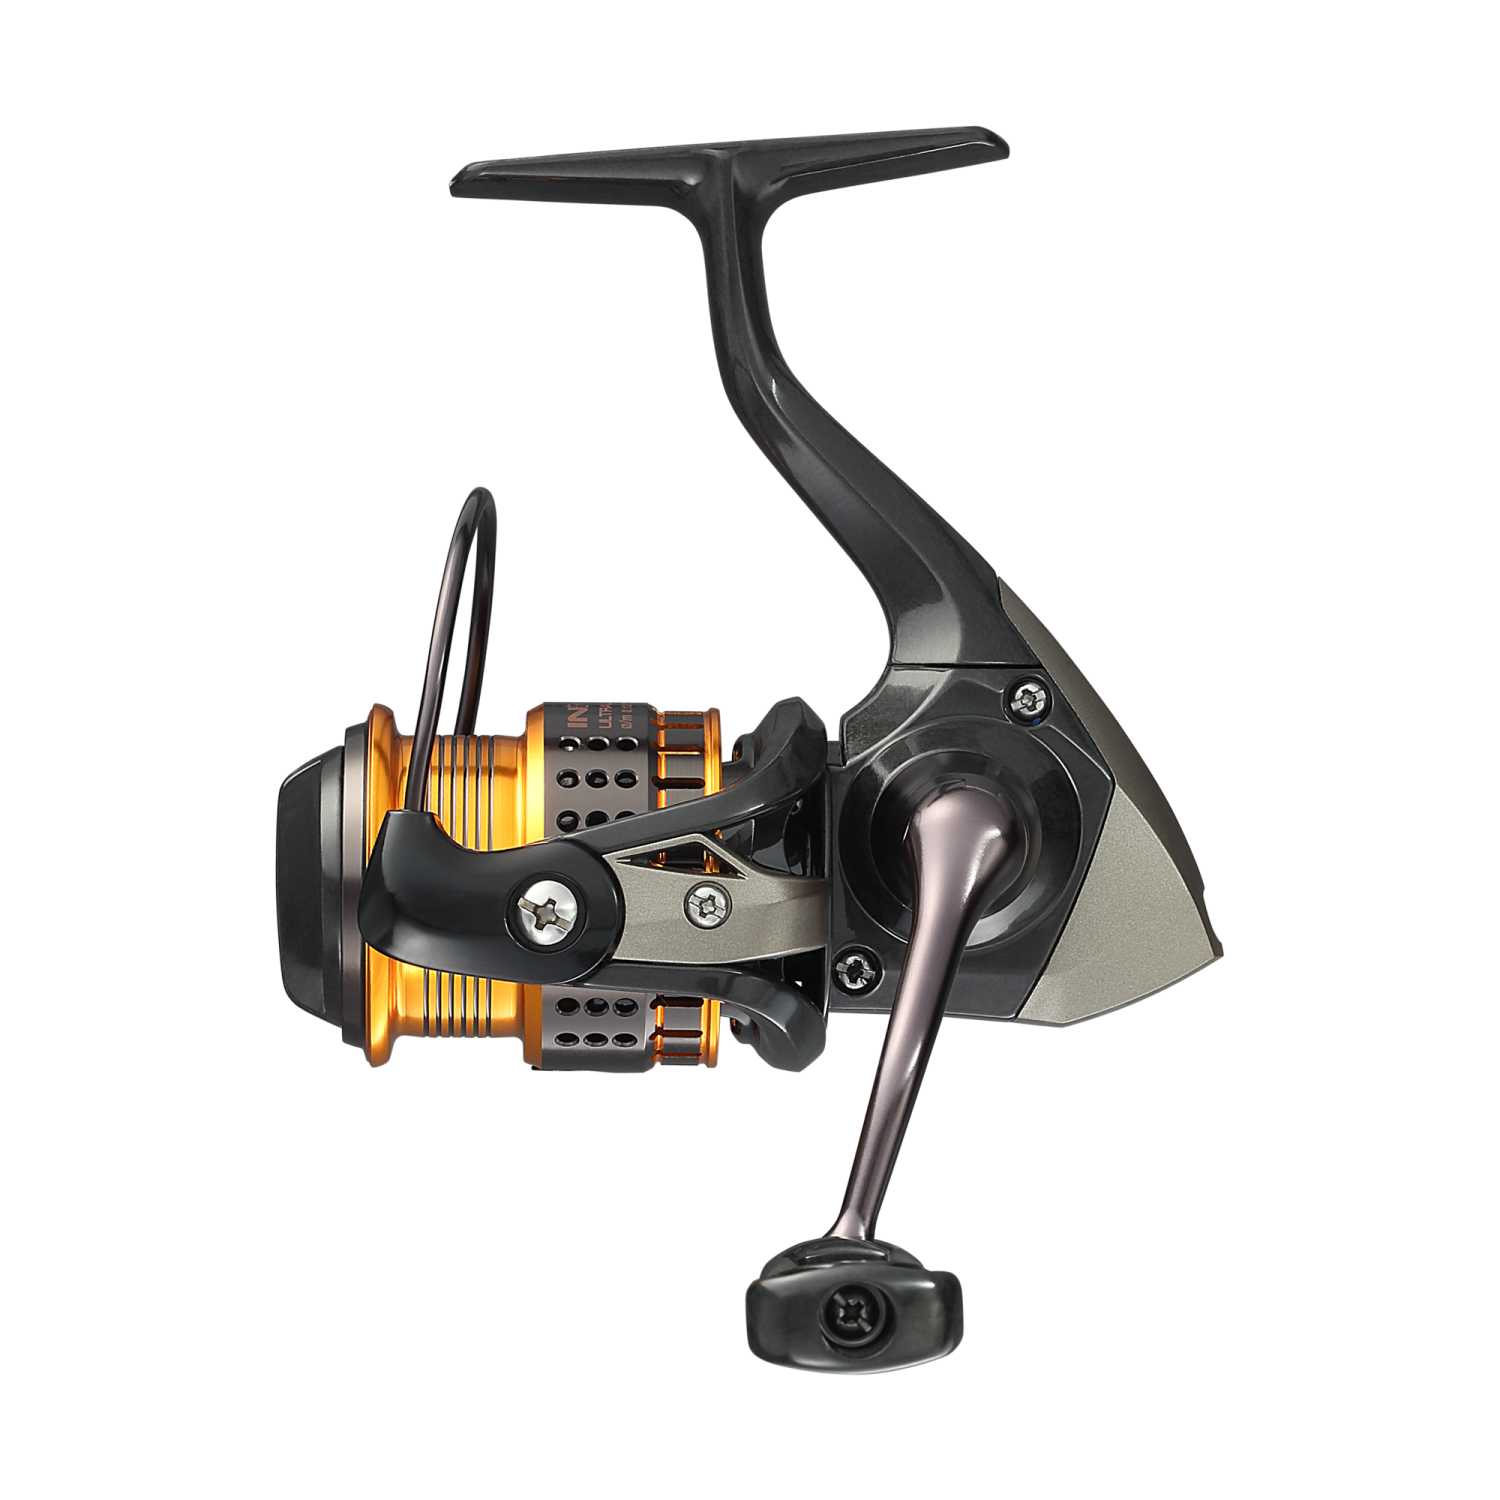 Stinger Innova Ultralight Reel, Fishing Reel, Spinning Reel